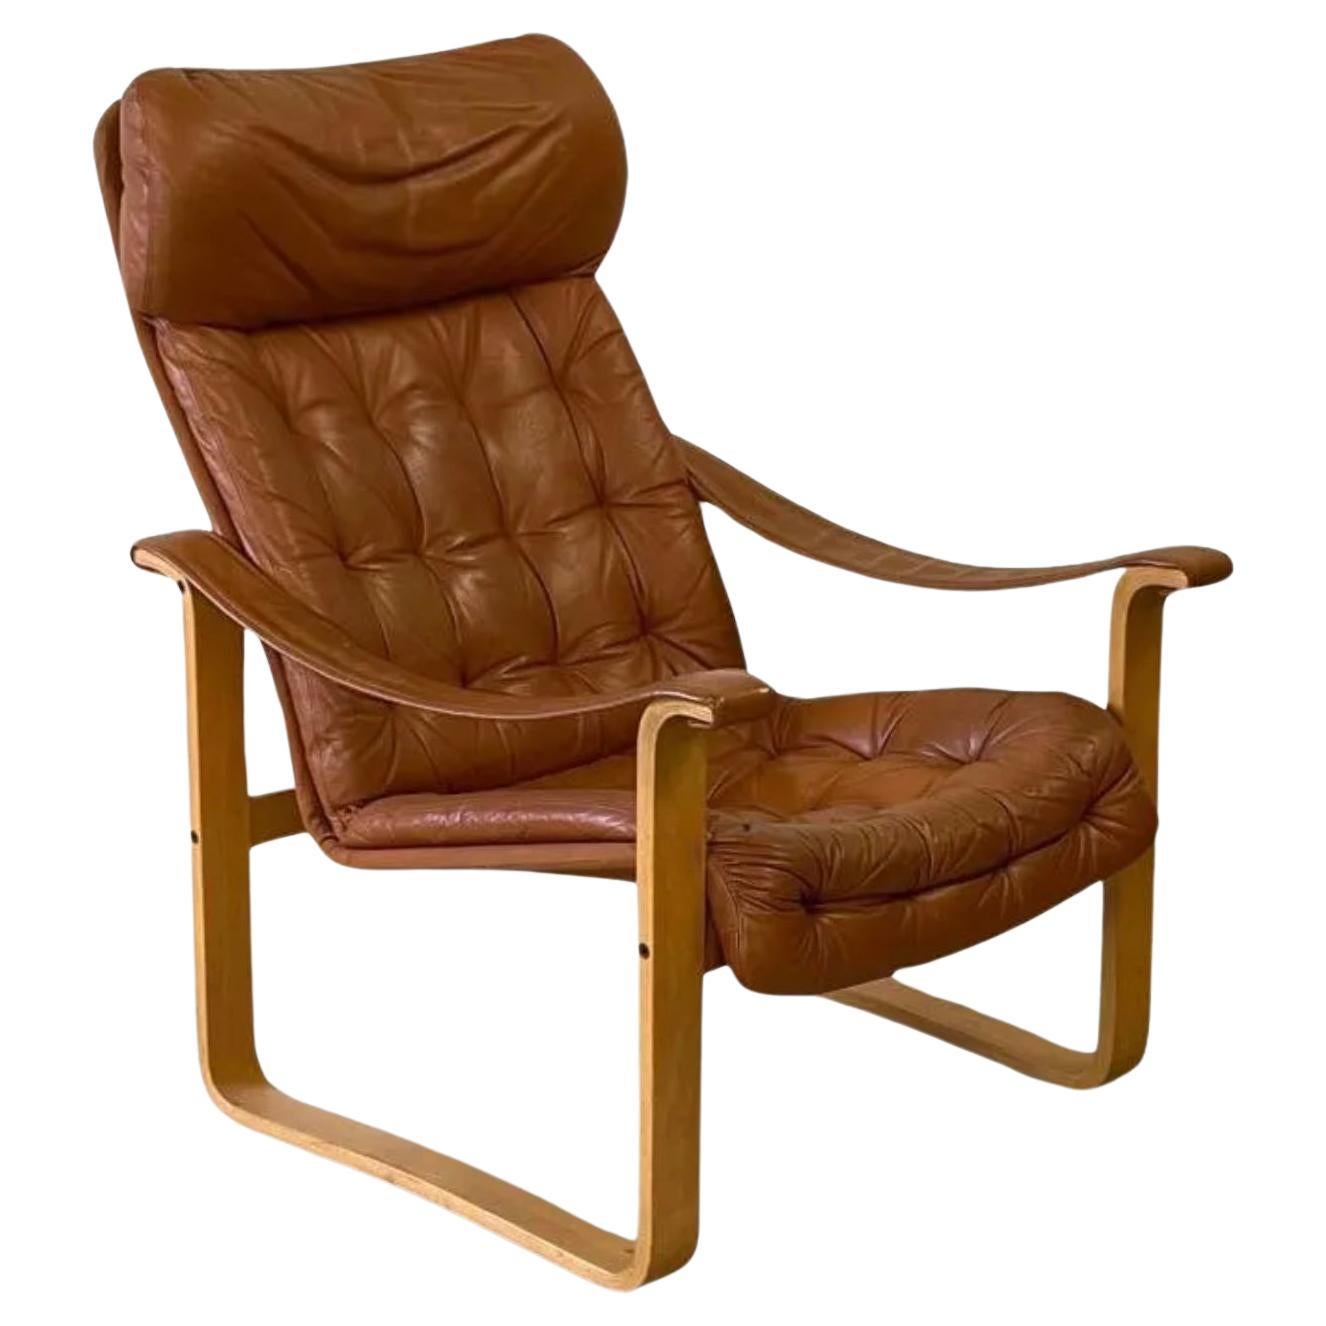 Scandinavian modern Blonde bentwood Leather lounge chair by Bjarne Dahlqvist